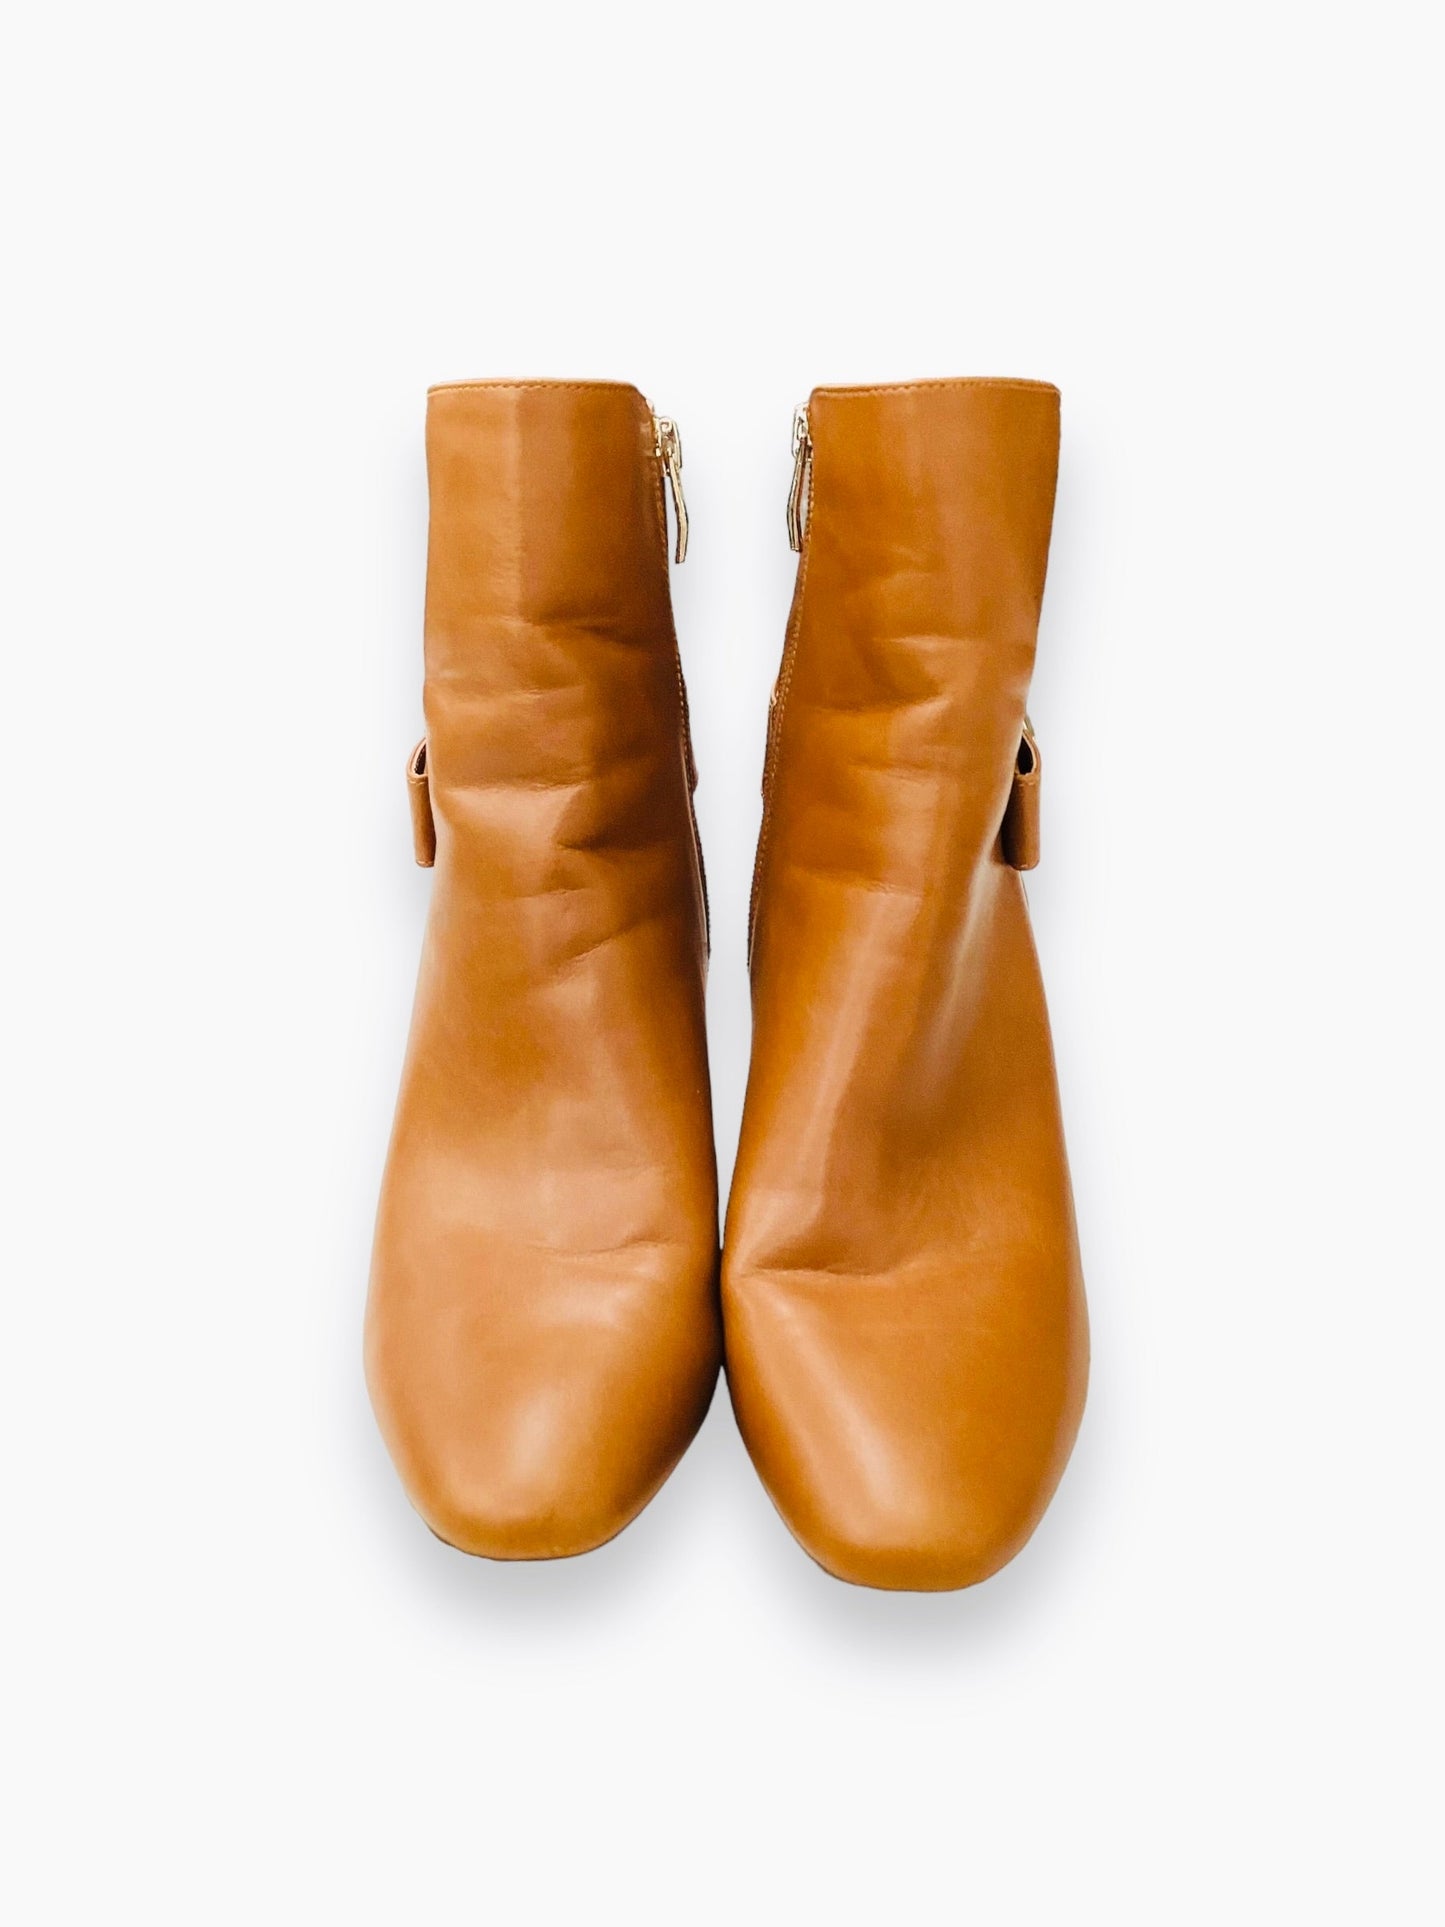 Brown Boots Ankle Heels Liz Claiborne, Size 8.5